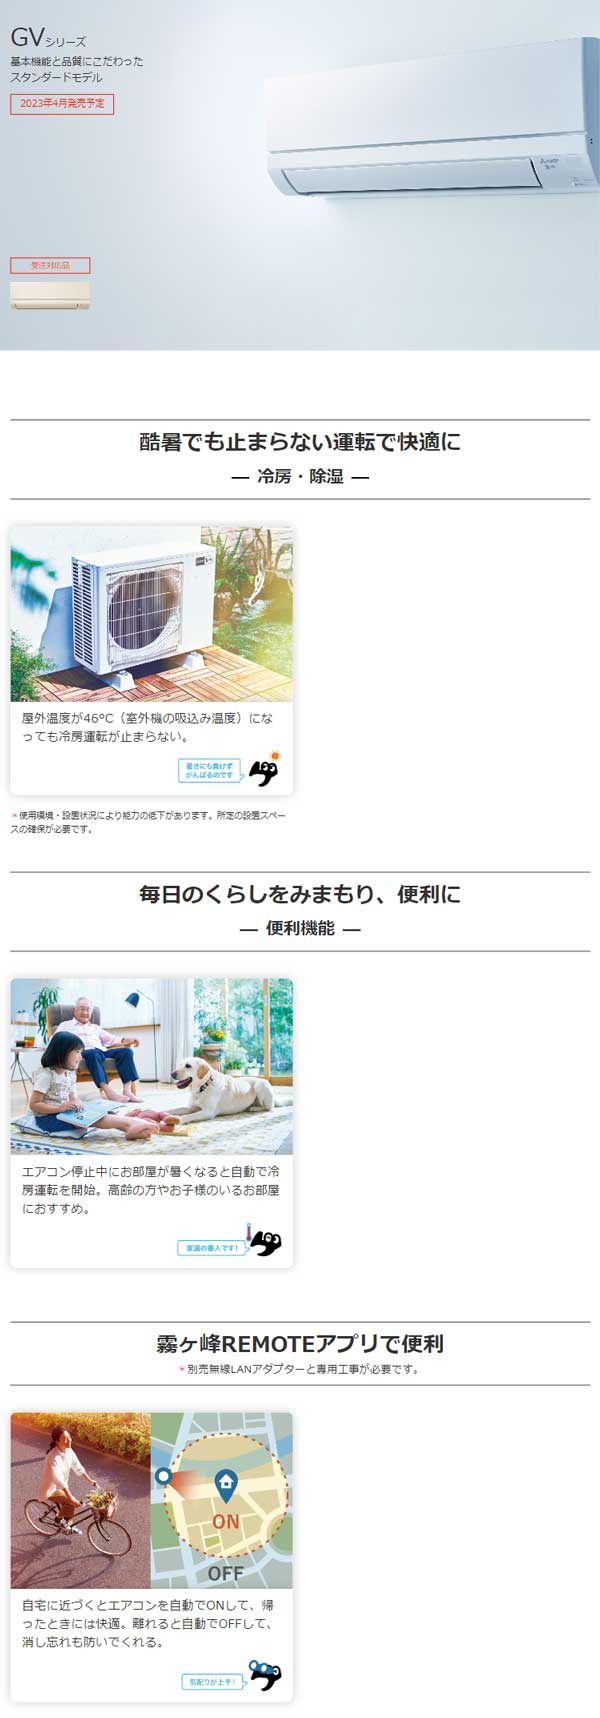 ACE.NET / MSZ-GV4023S-W 三菱電機 ルームエアコン [ピュアホワイト